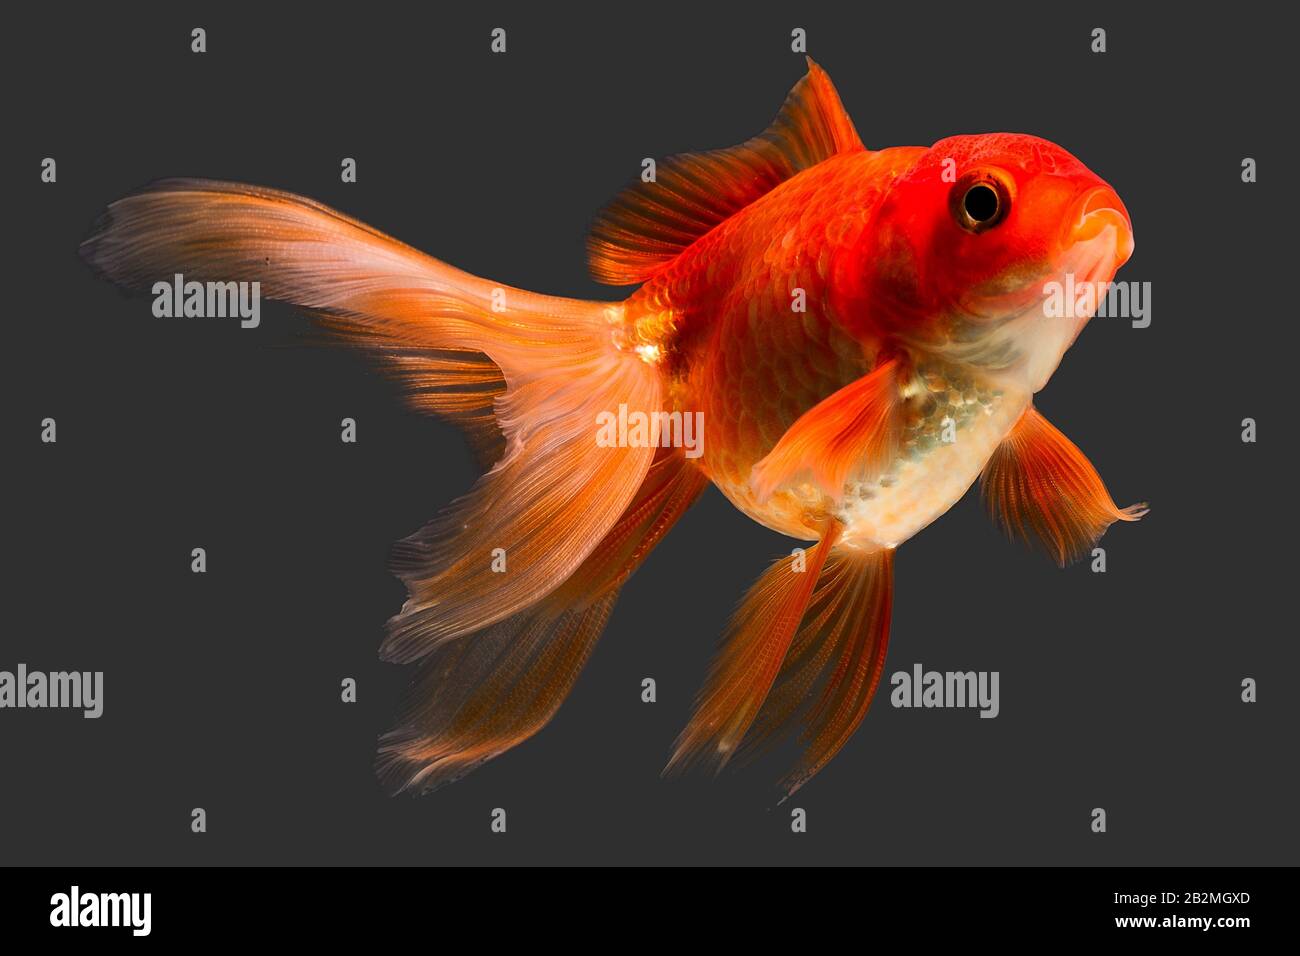 Red Cap Oranda Goldfish Isolated On Gray High Quality Studio Aquarium Shot Stock Photo